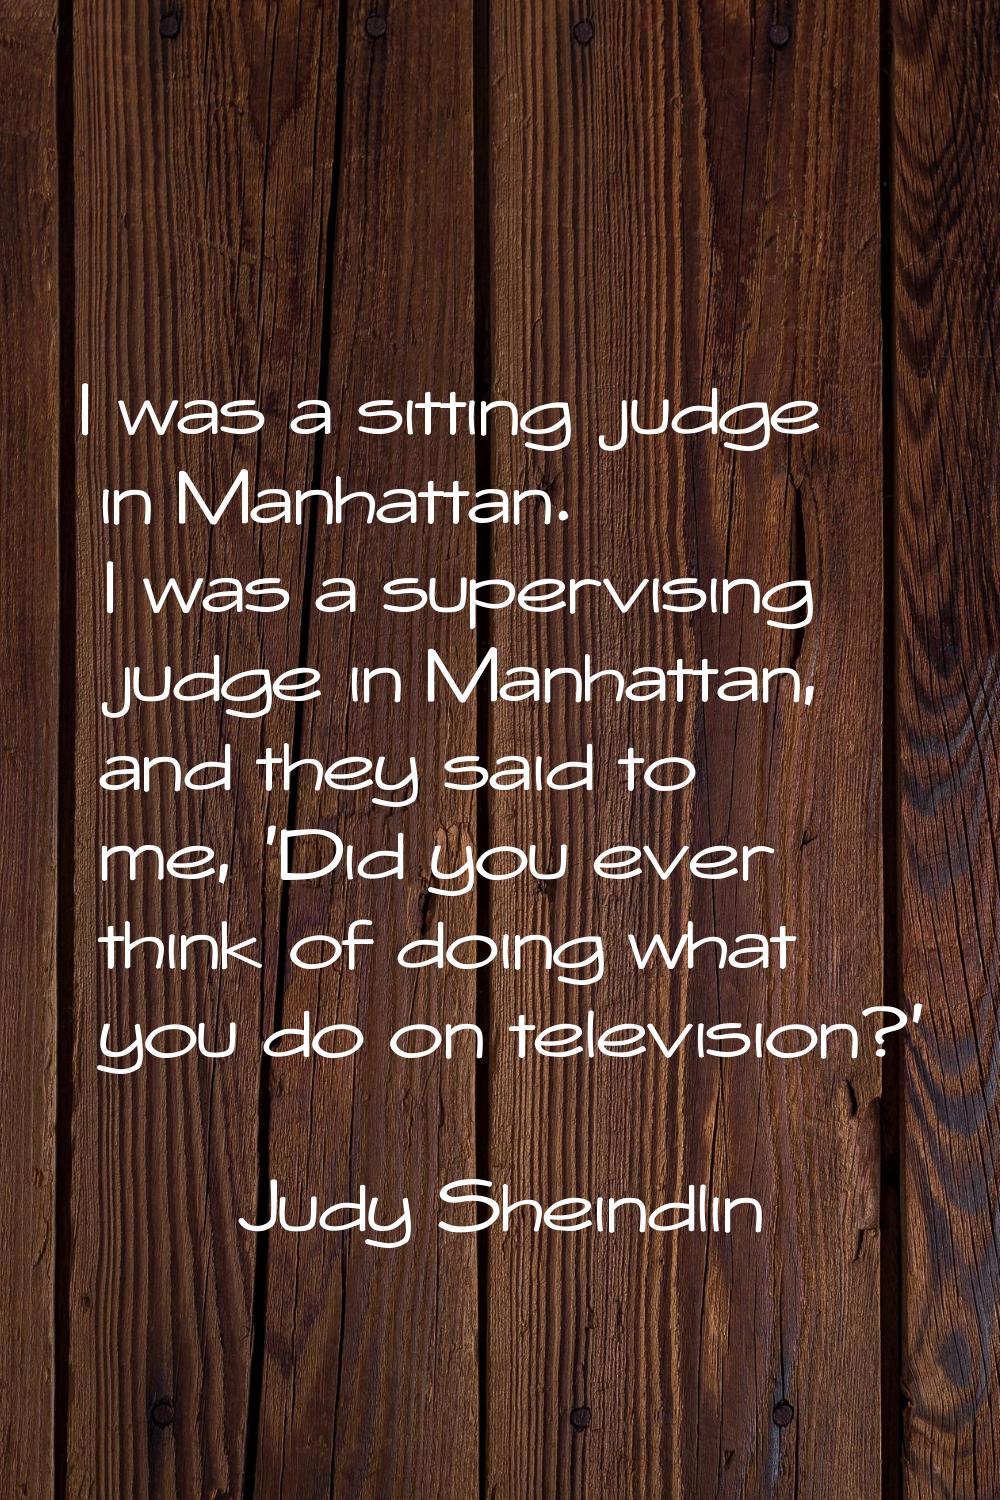 I was a sitting judge in Manhattan. I was a supervising judge in Manhattan, and they said to me, 'D